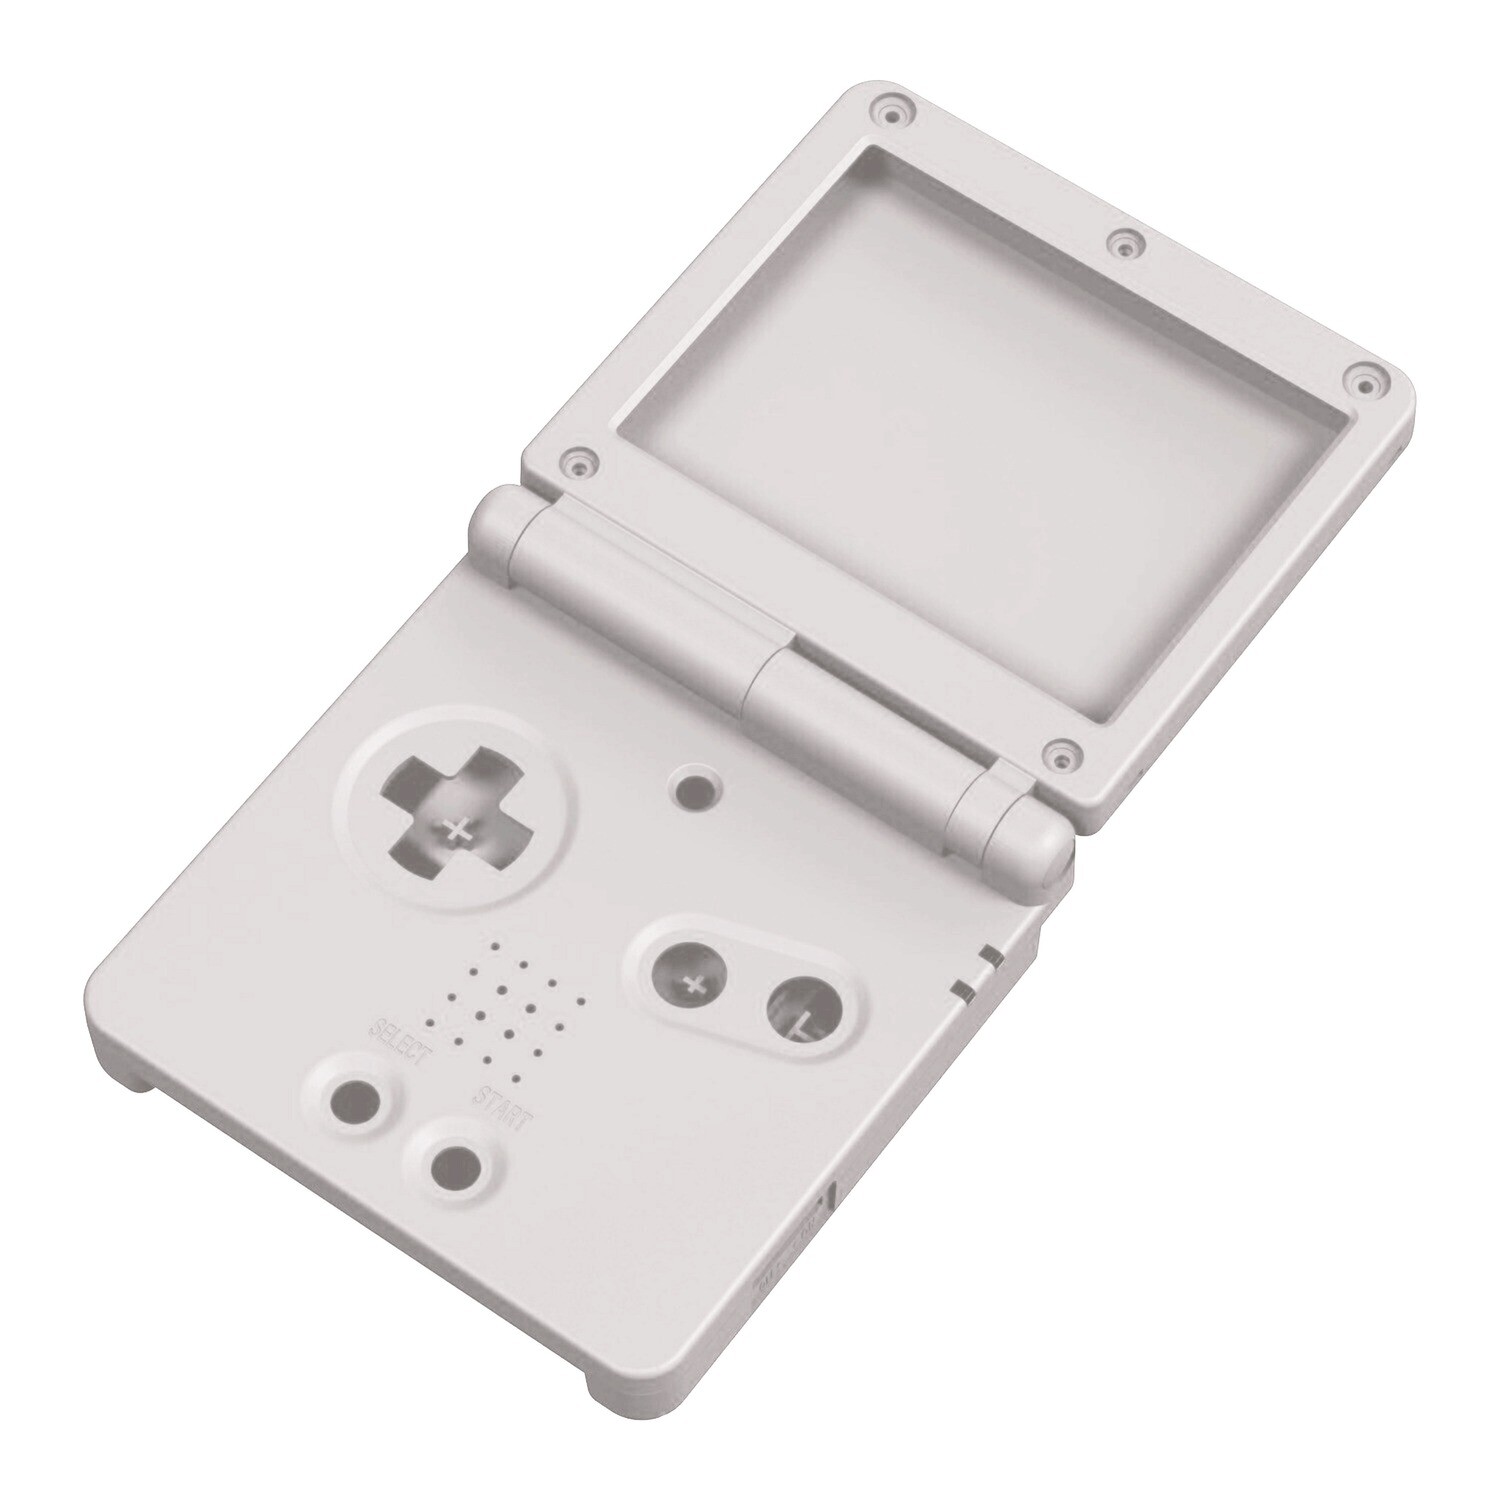 Game Boy Advance SP Shell (DMG Grey)